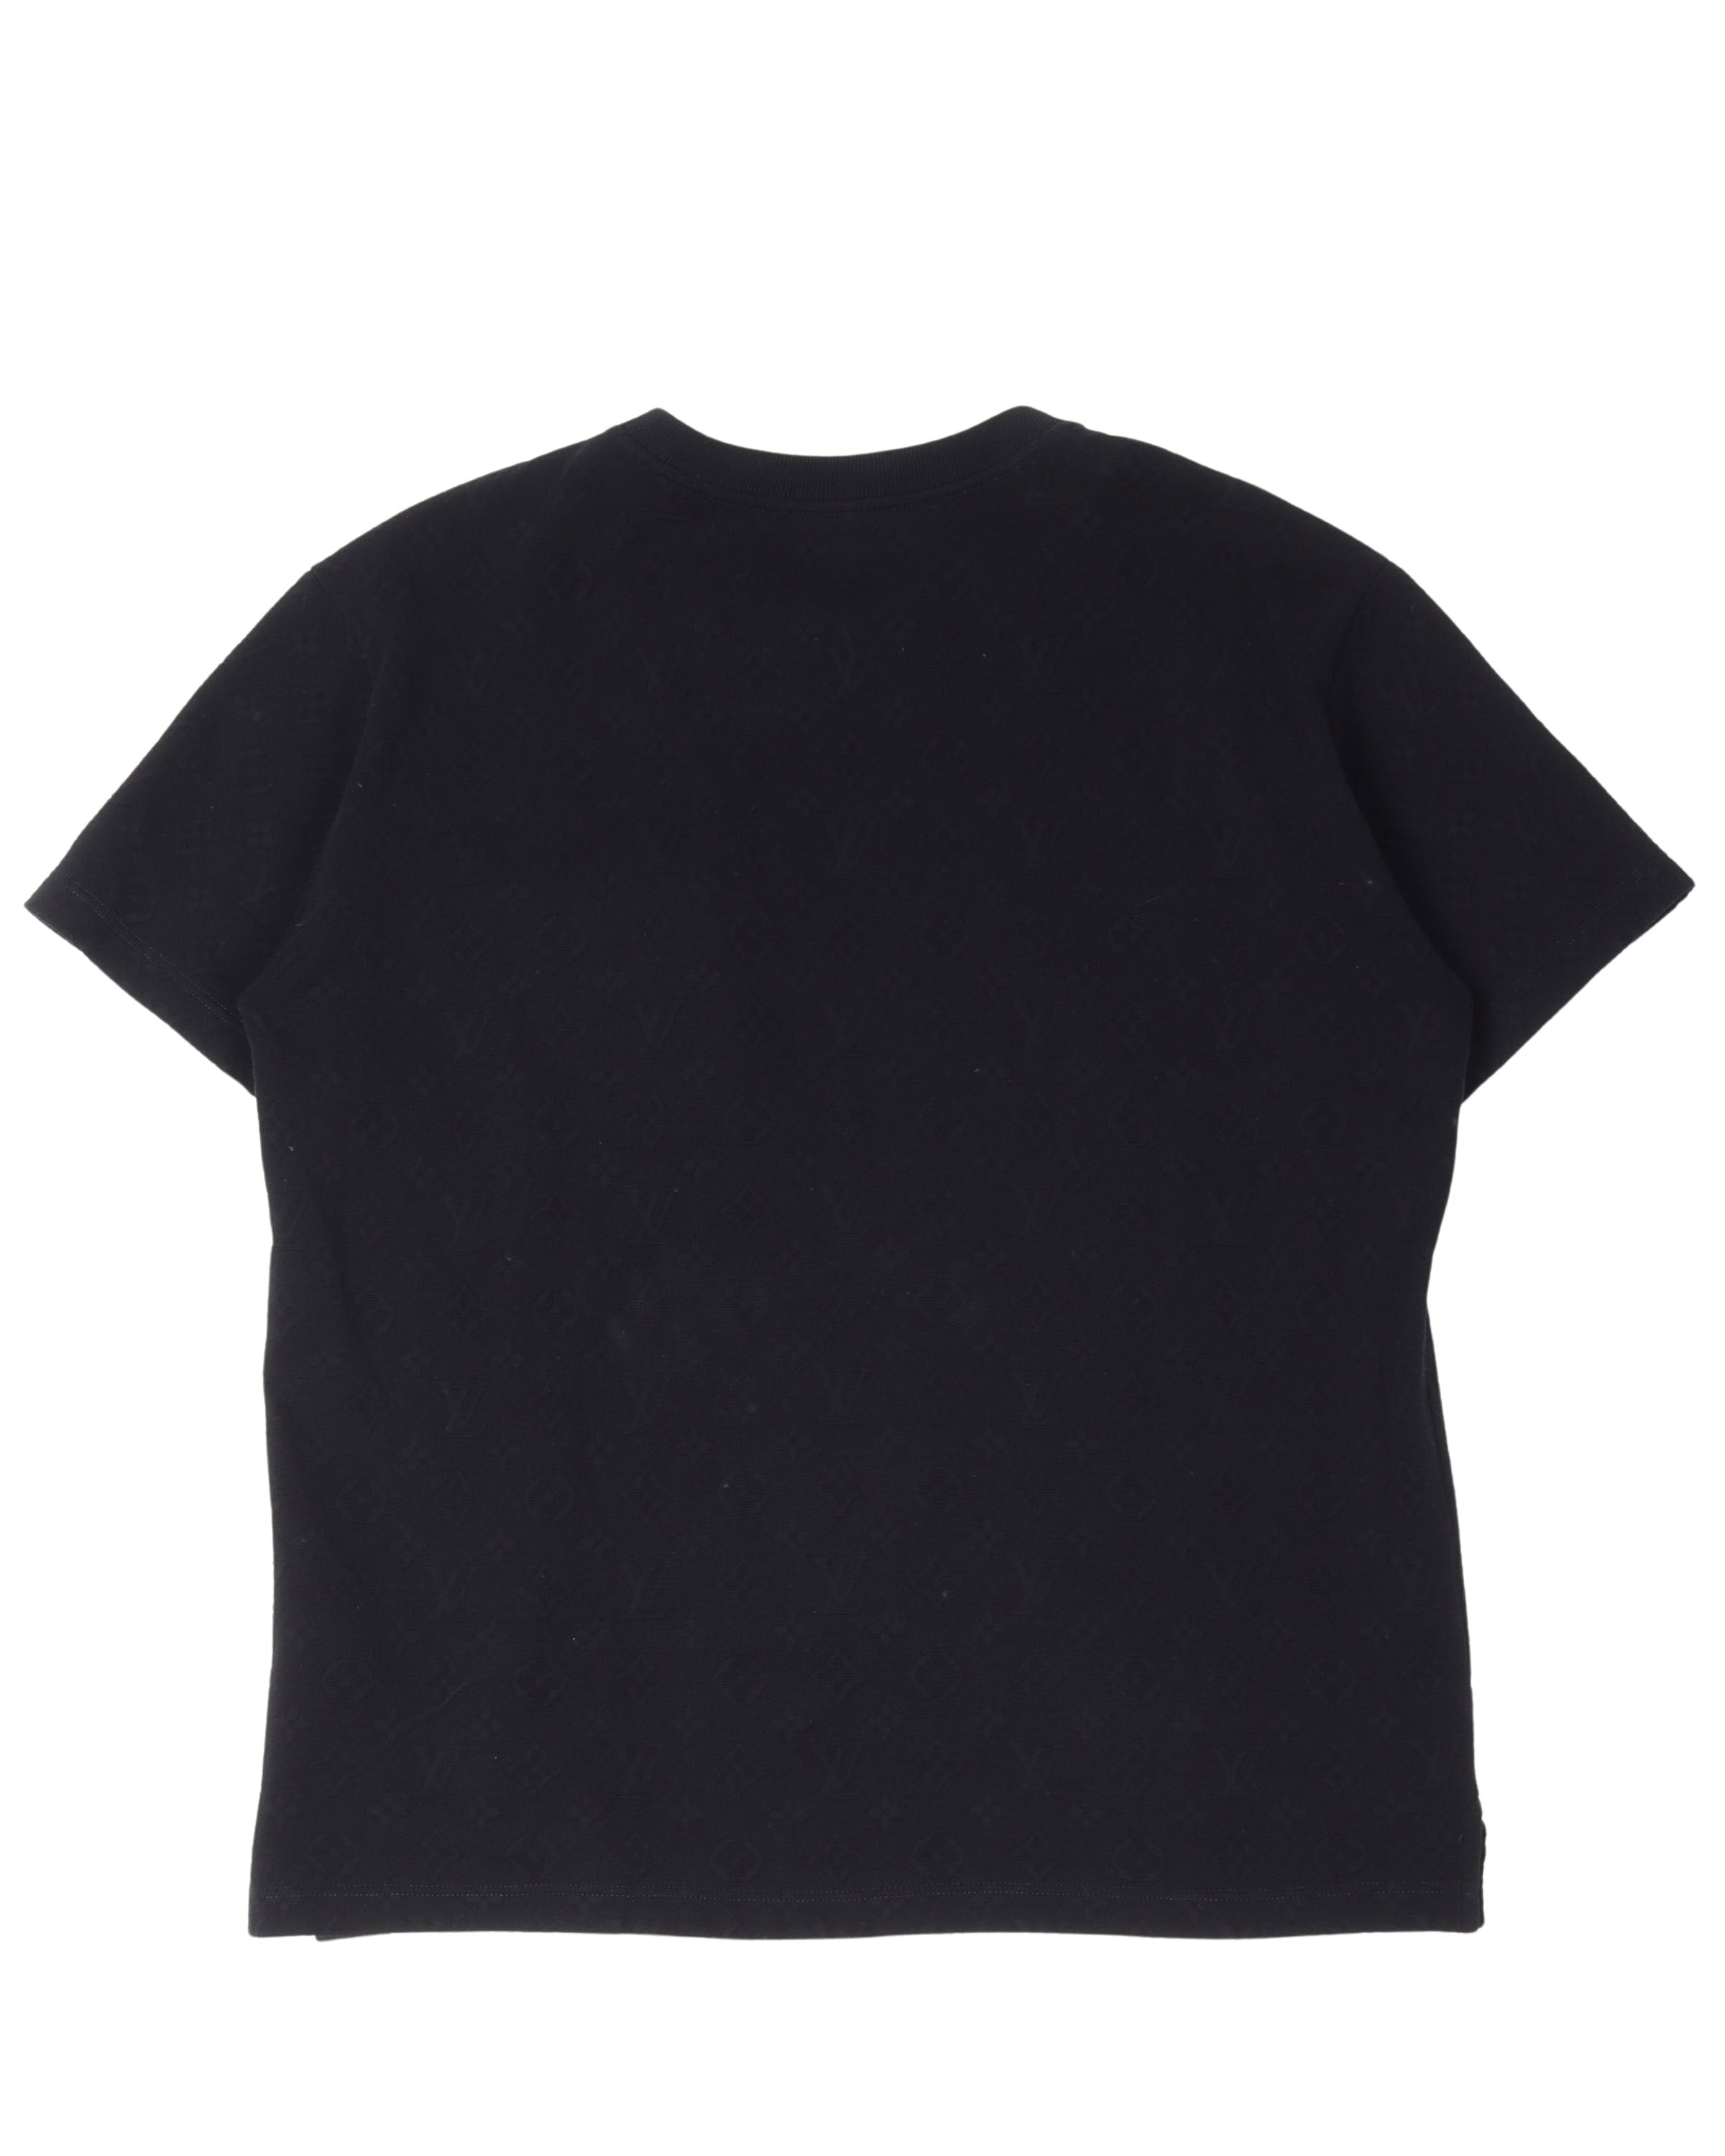 Louis Vuitton Monogram Pocket Knit T-Shirt Dress Night Blue. Size M0